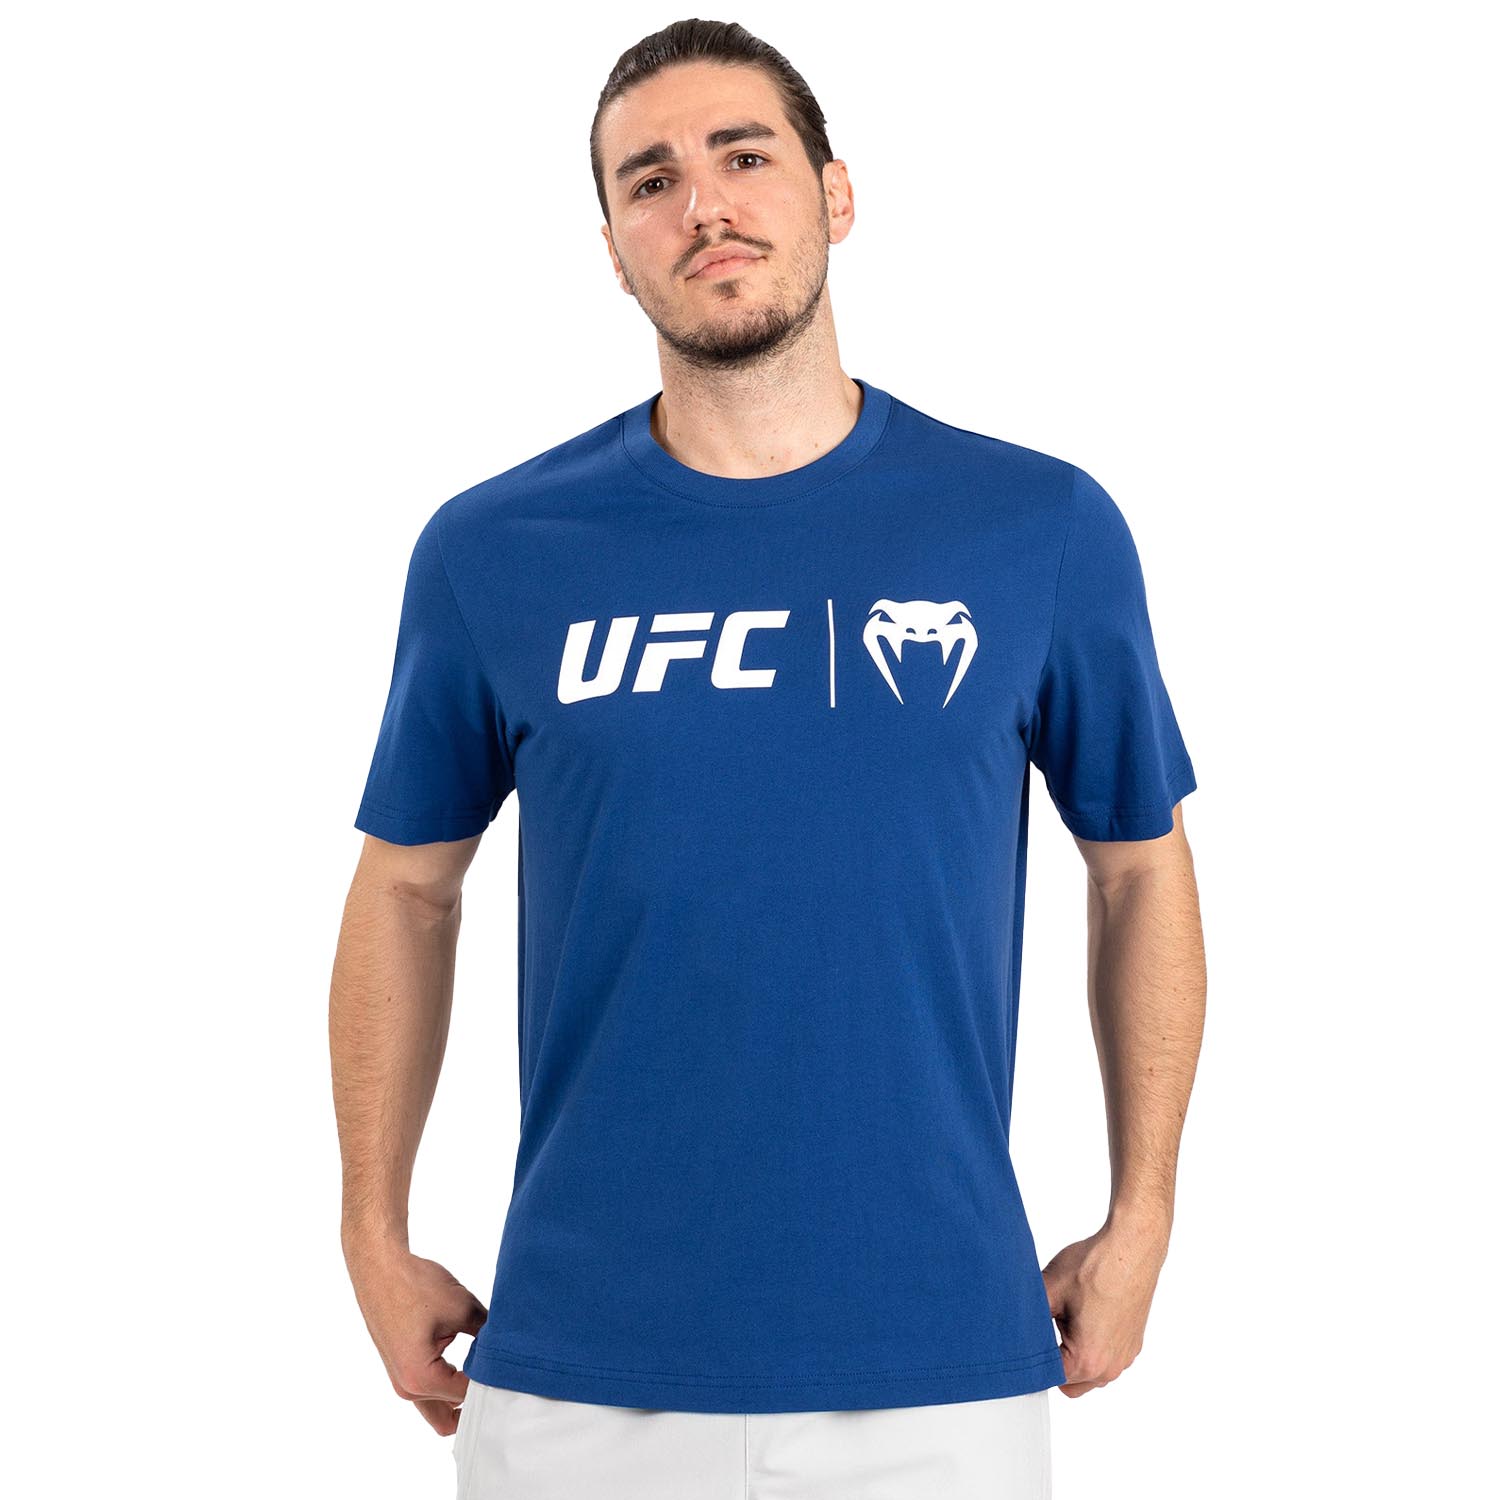 VENUM T-Shirt, UFC Classic, navy-white